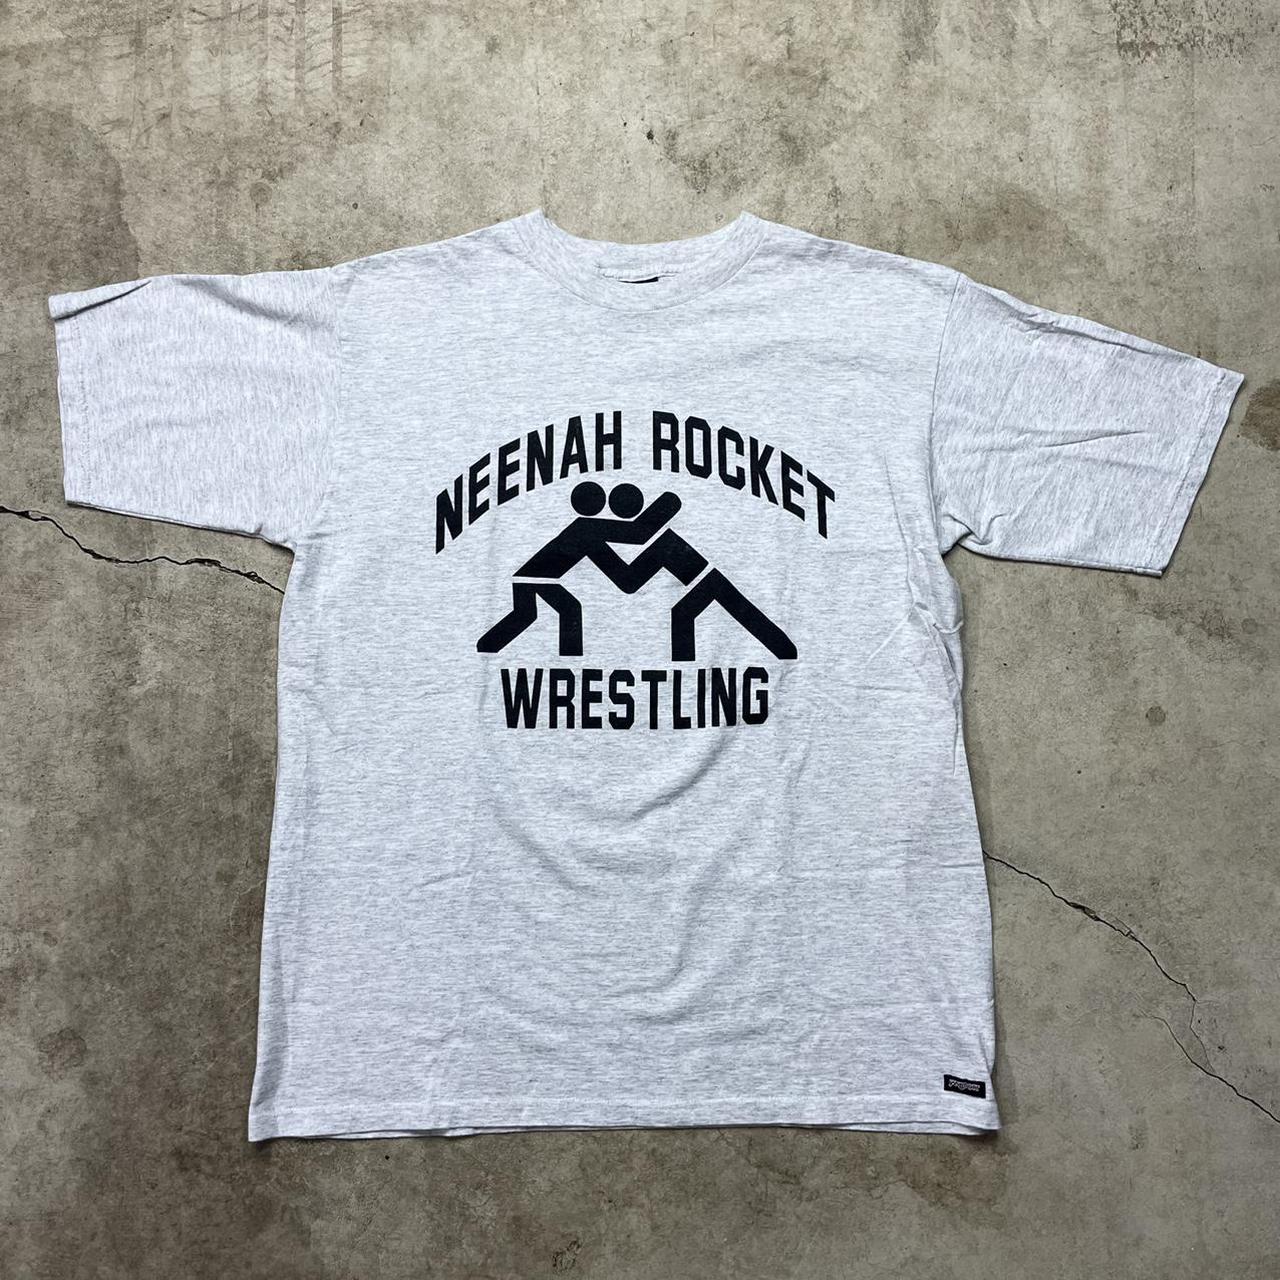 Product Image 1 - Vintage Neenah Rockets Wrestling T-shirt